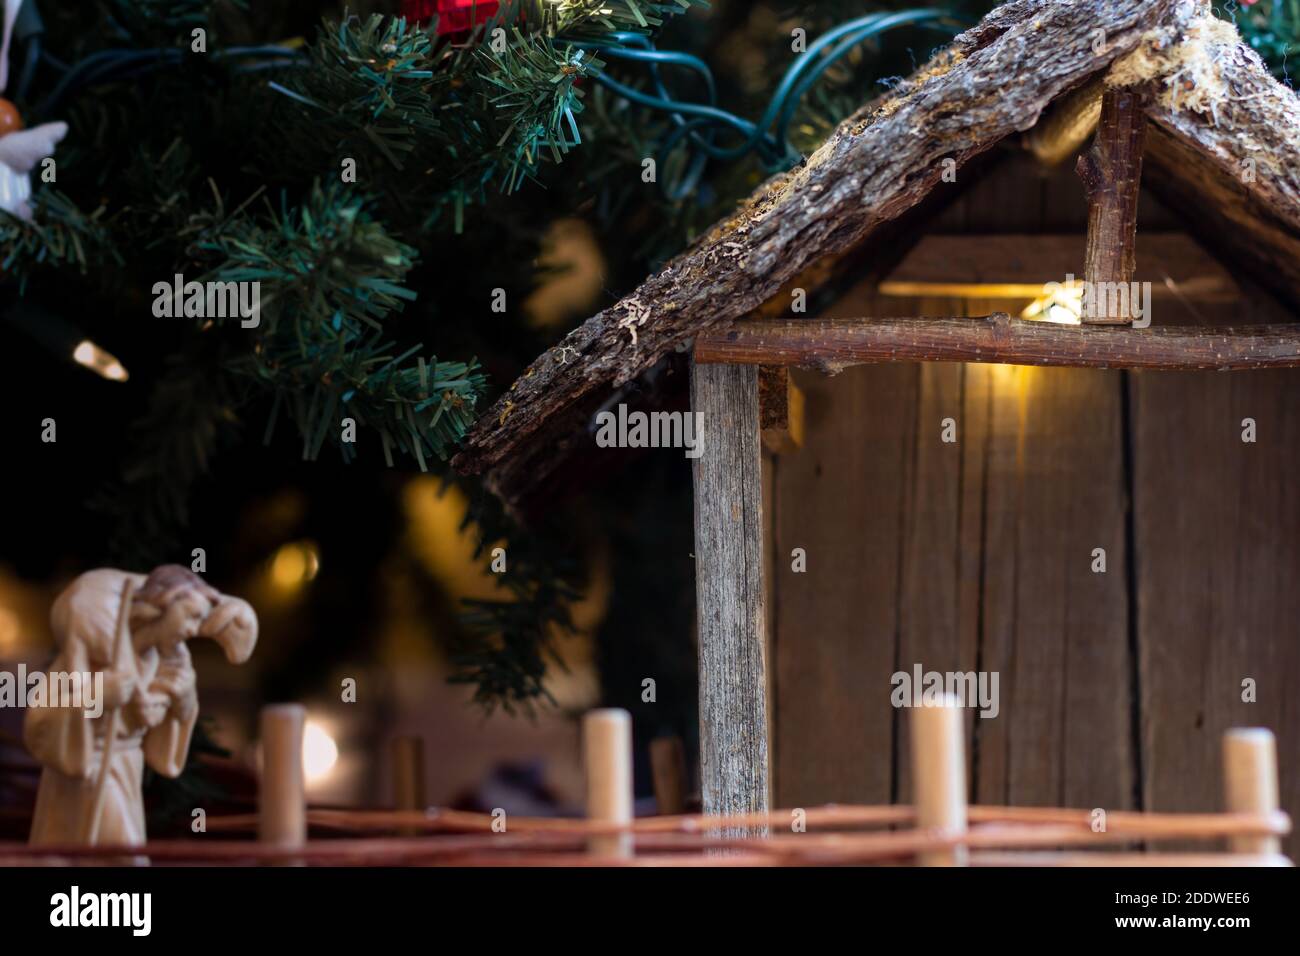 rustic wood nativity scene empty stable waiting under Christmas tree, background Stock Photo